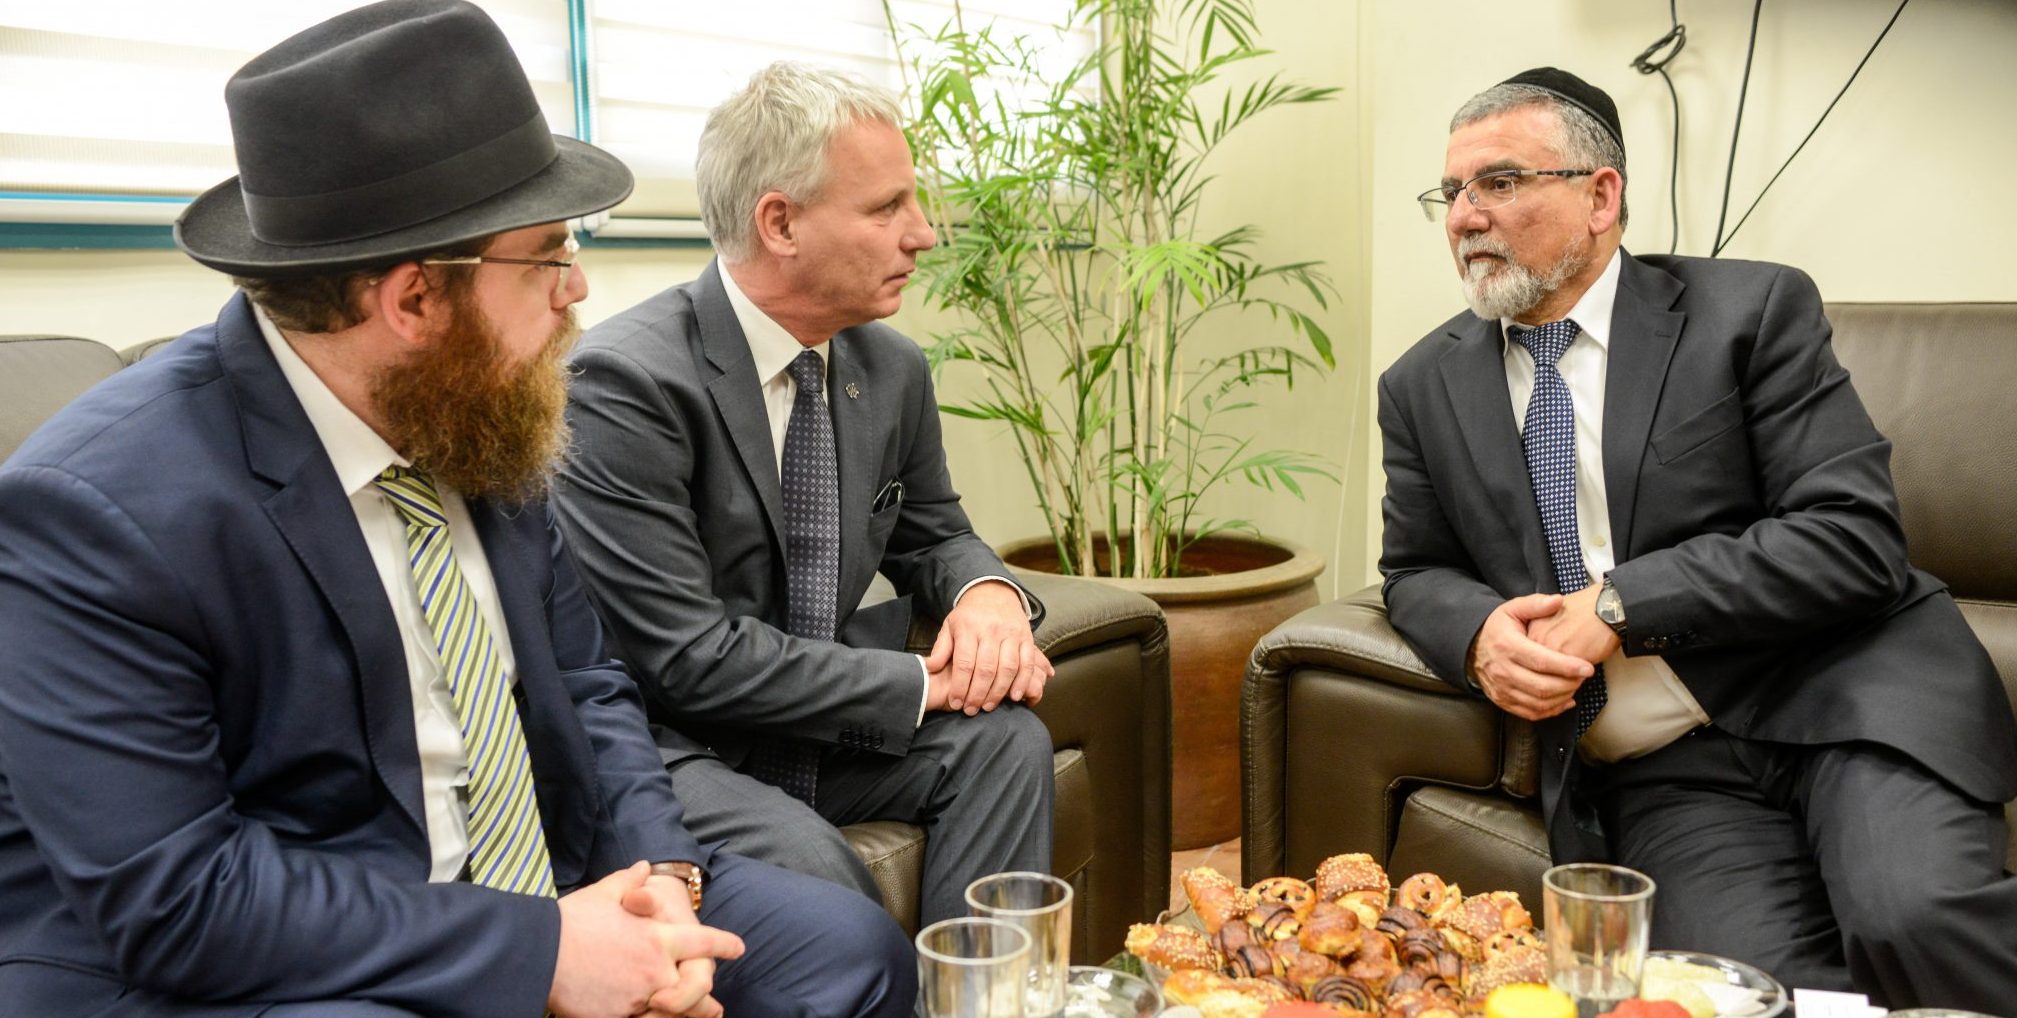 Hungarian state secretary discusses religious ties in Jerusalem